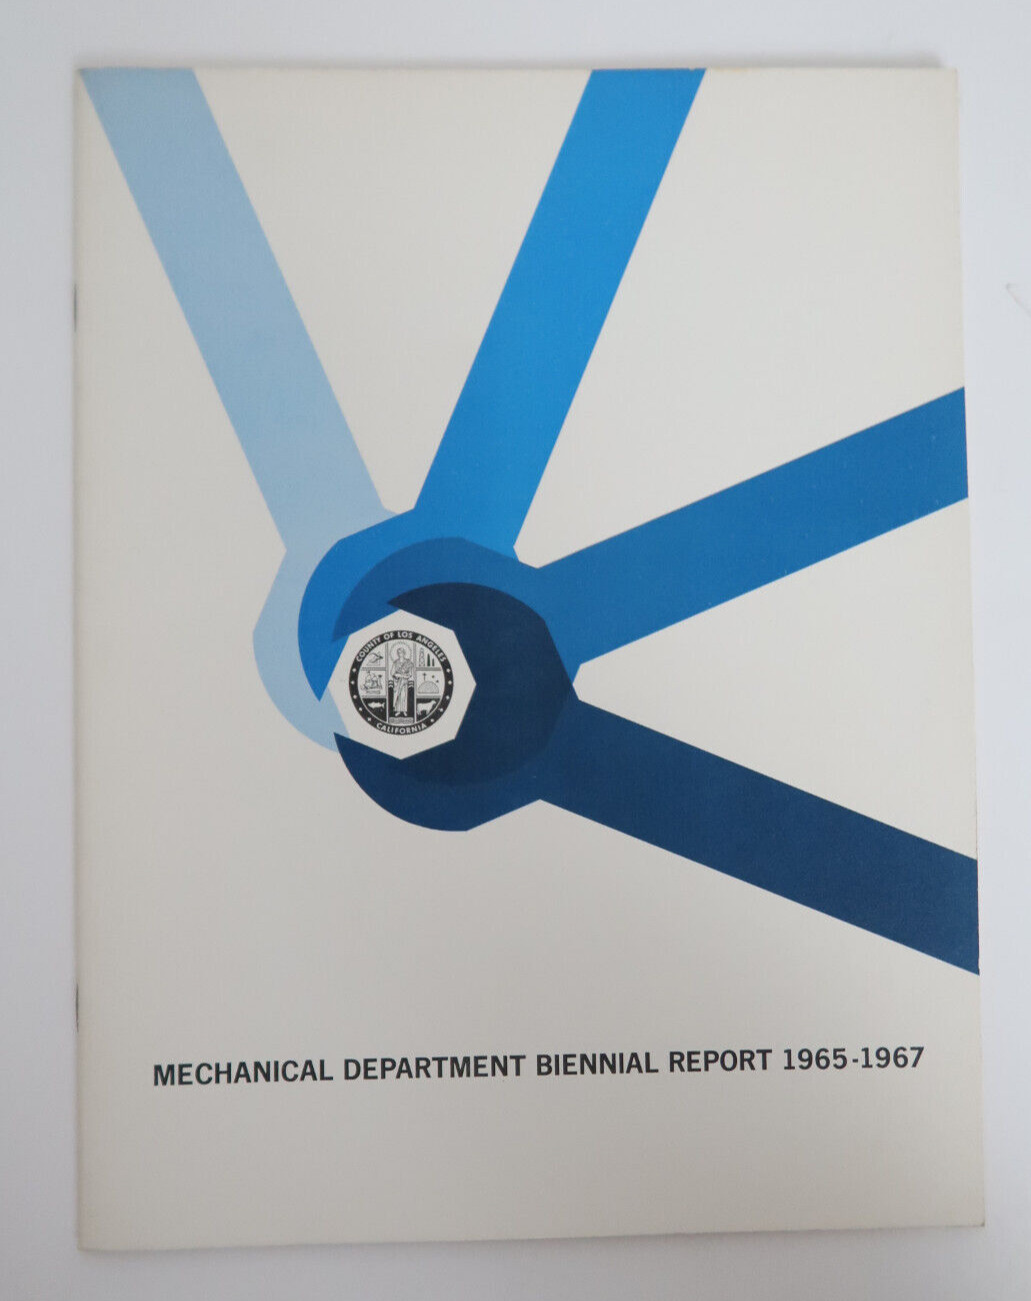 Mechanical Department Biennial Report 1965-1967 Book Program Vintage Publication